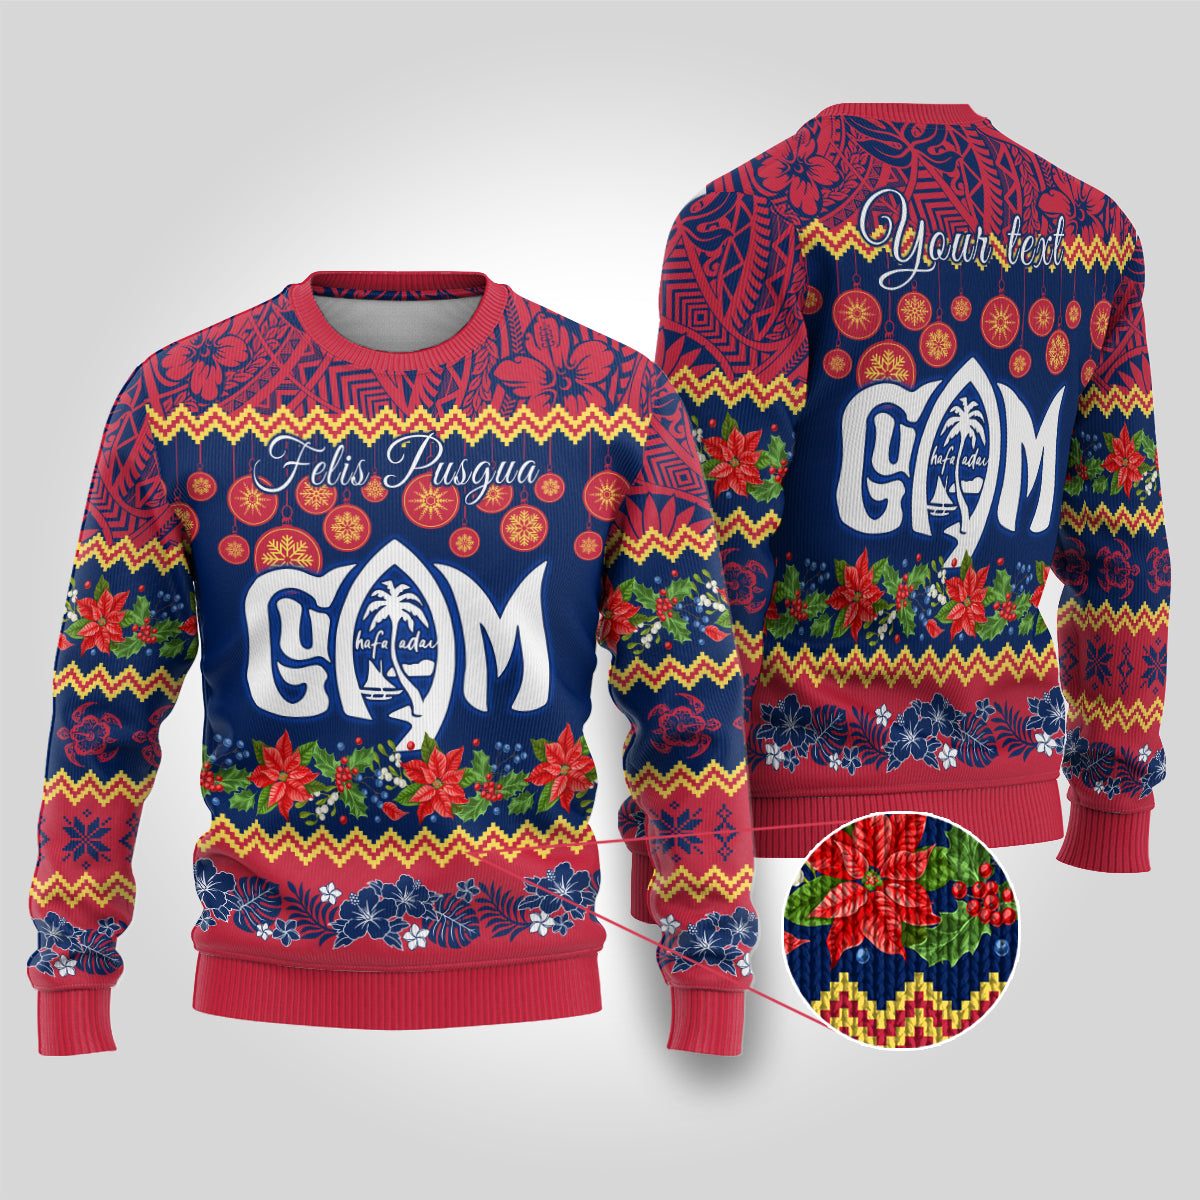 Personalised Guam Christmas Ugly Christmas Sweater Felis Pusgua Santa Beach Polynesian Pattern LT9 Blue - Polynesian Pride